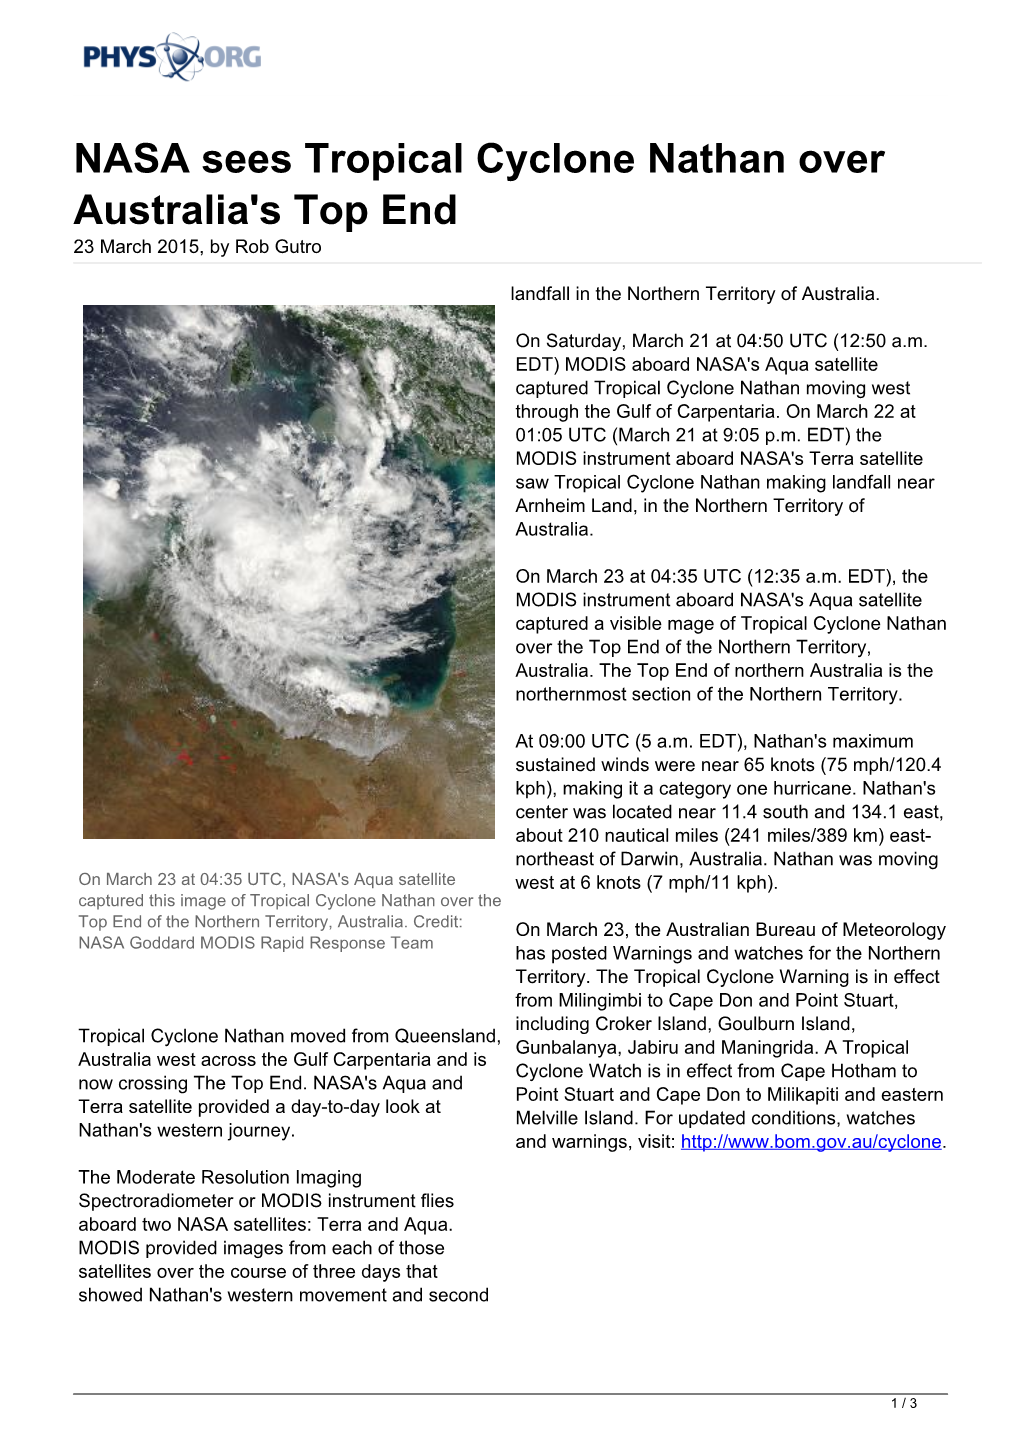 NASA Sees Tropical Cyclone Nathan Over Australia's Top End 23 March 2015, by Rob Gutro